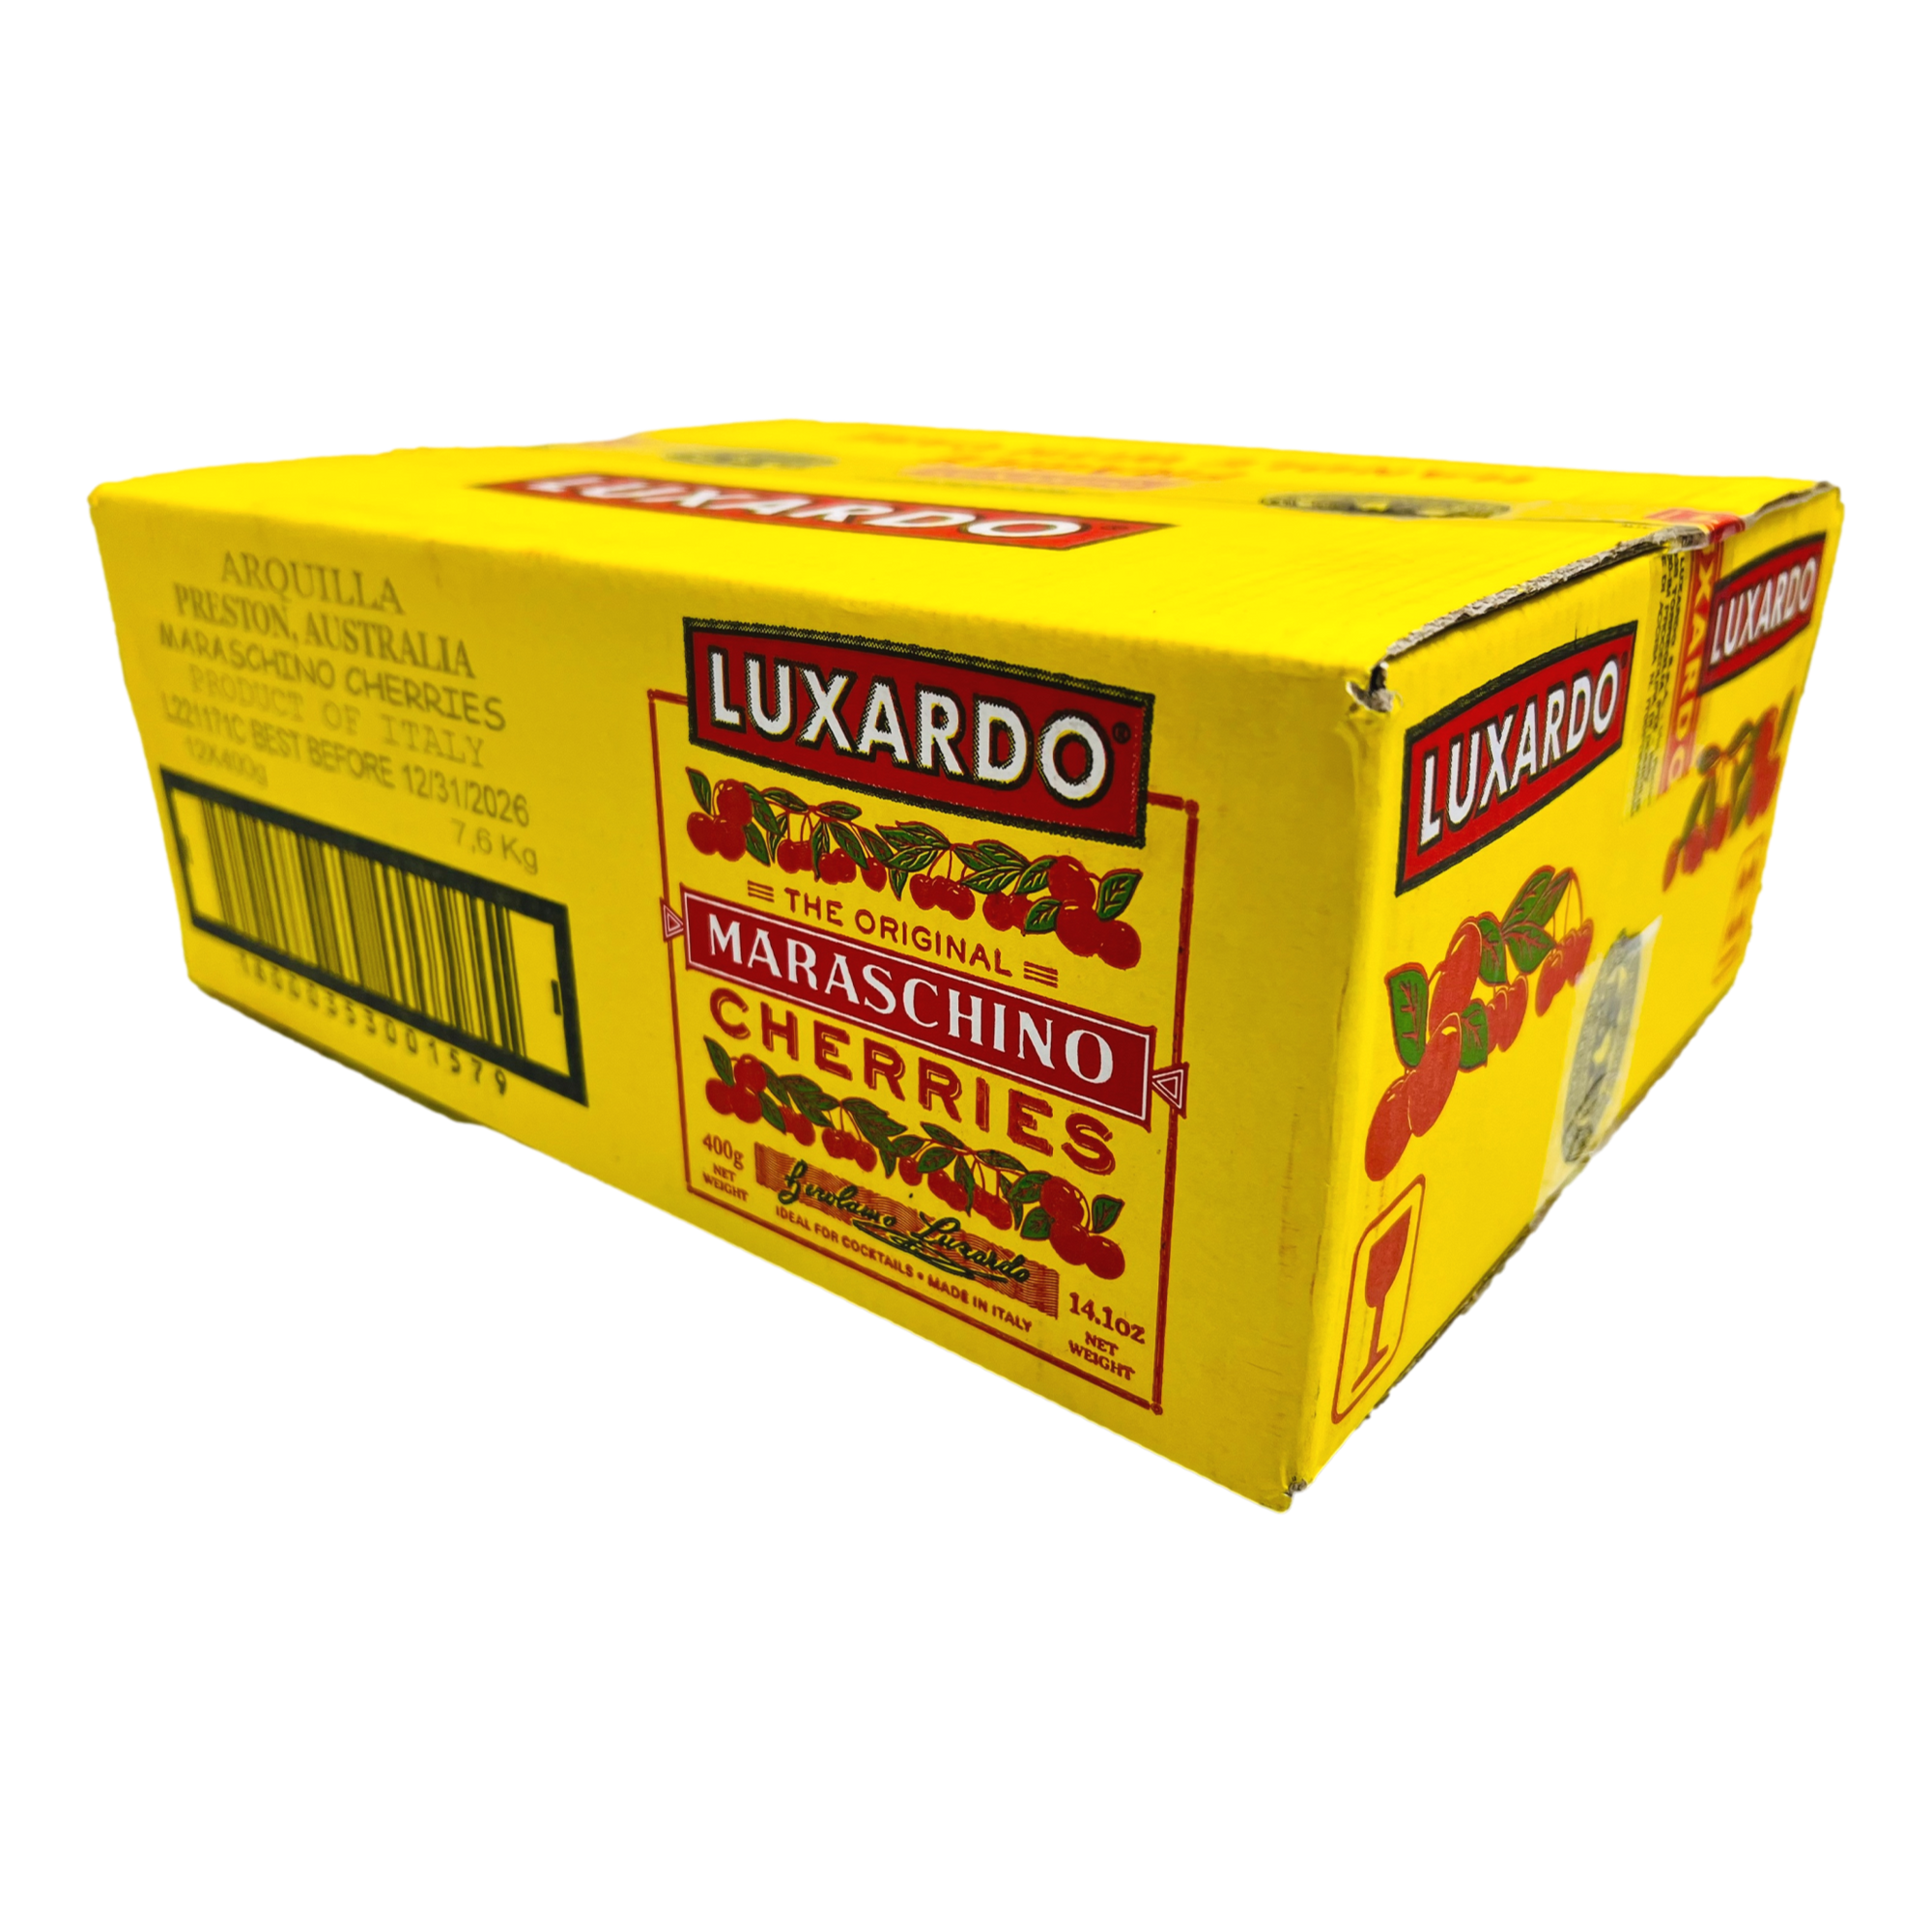 Luxardo Maraschino Cocktail Cherries in Syrup 400g Jar Case of 12